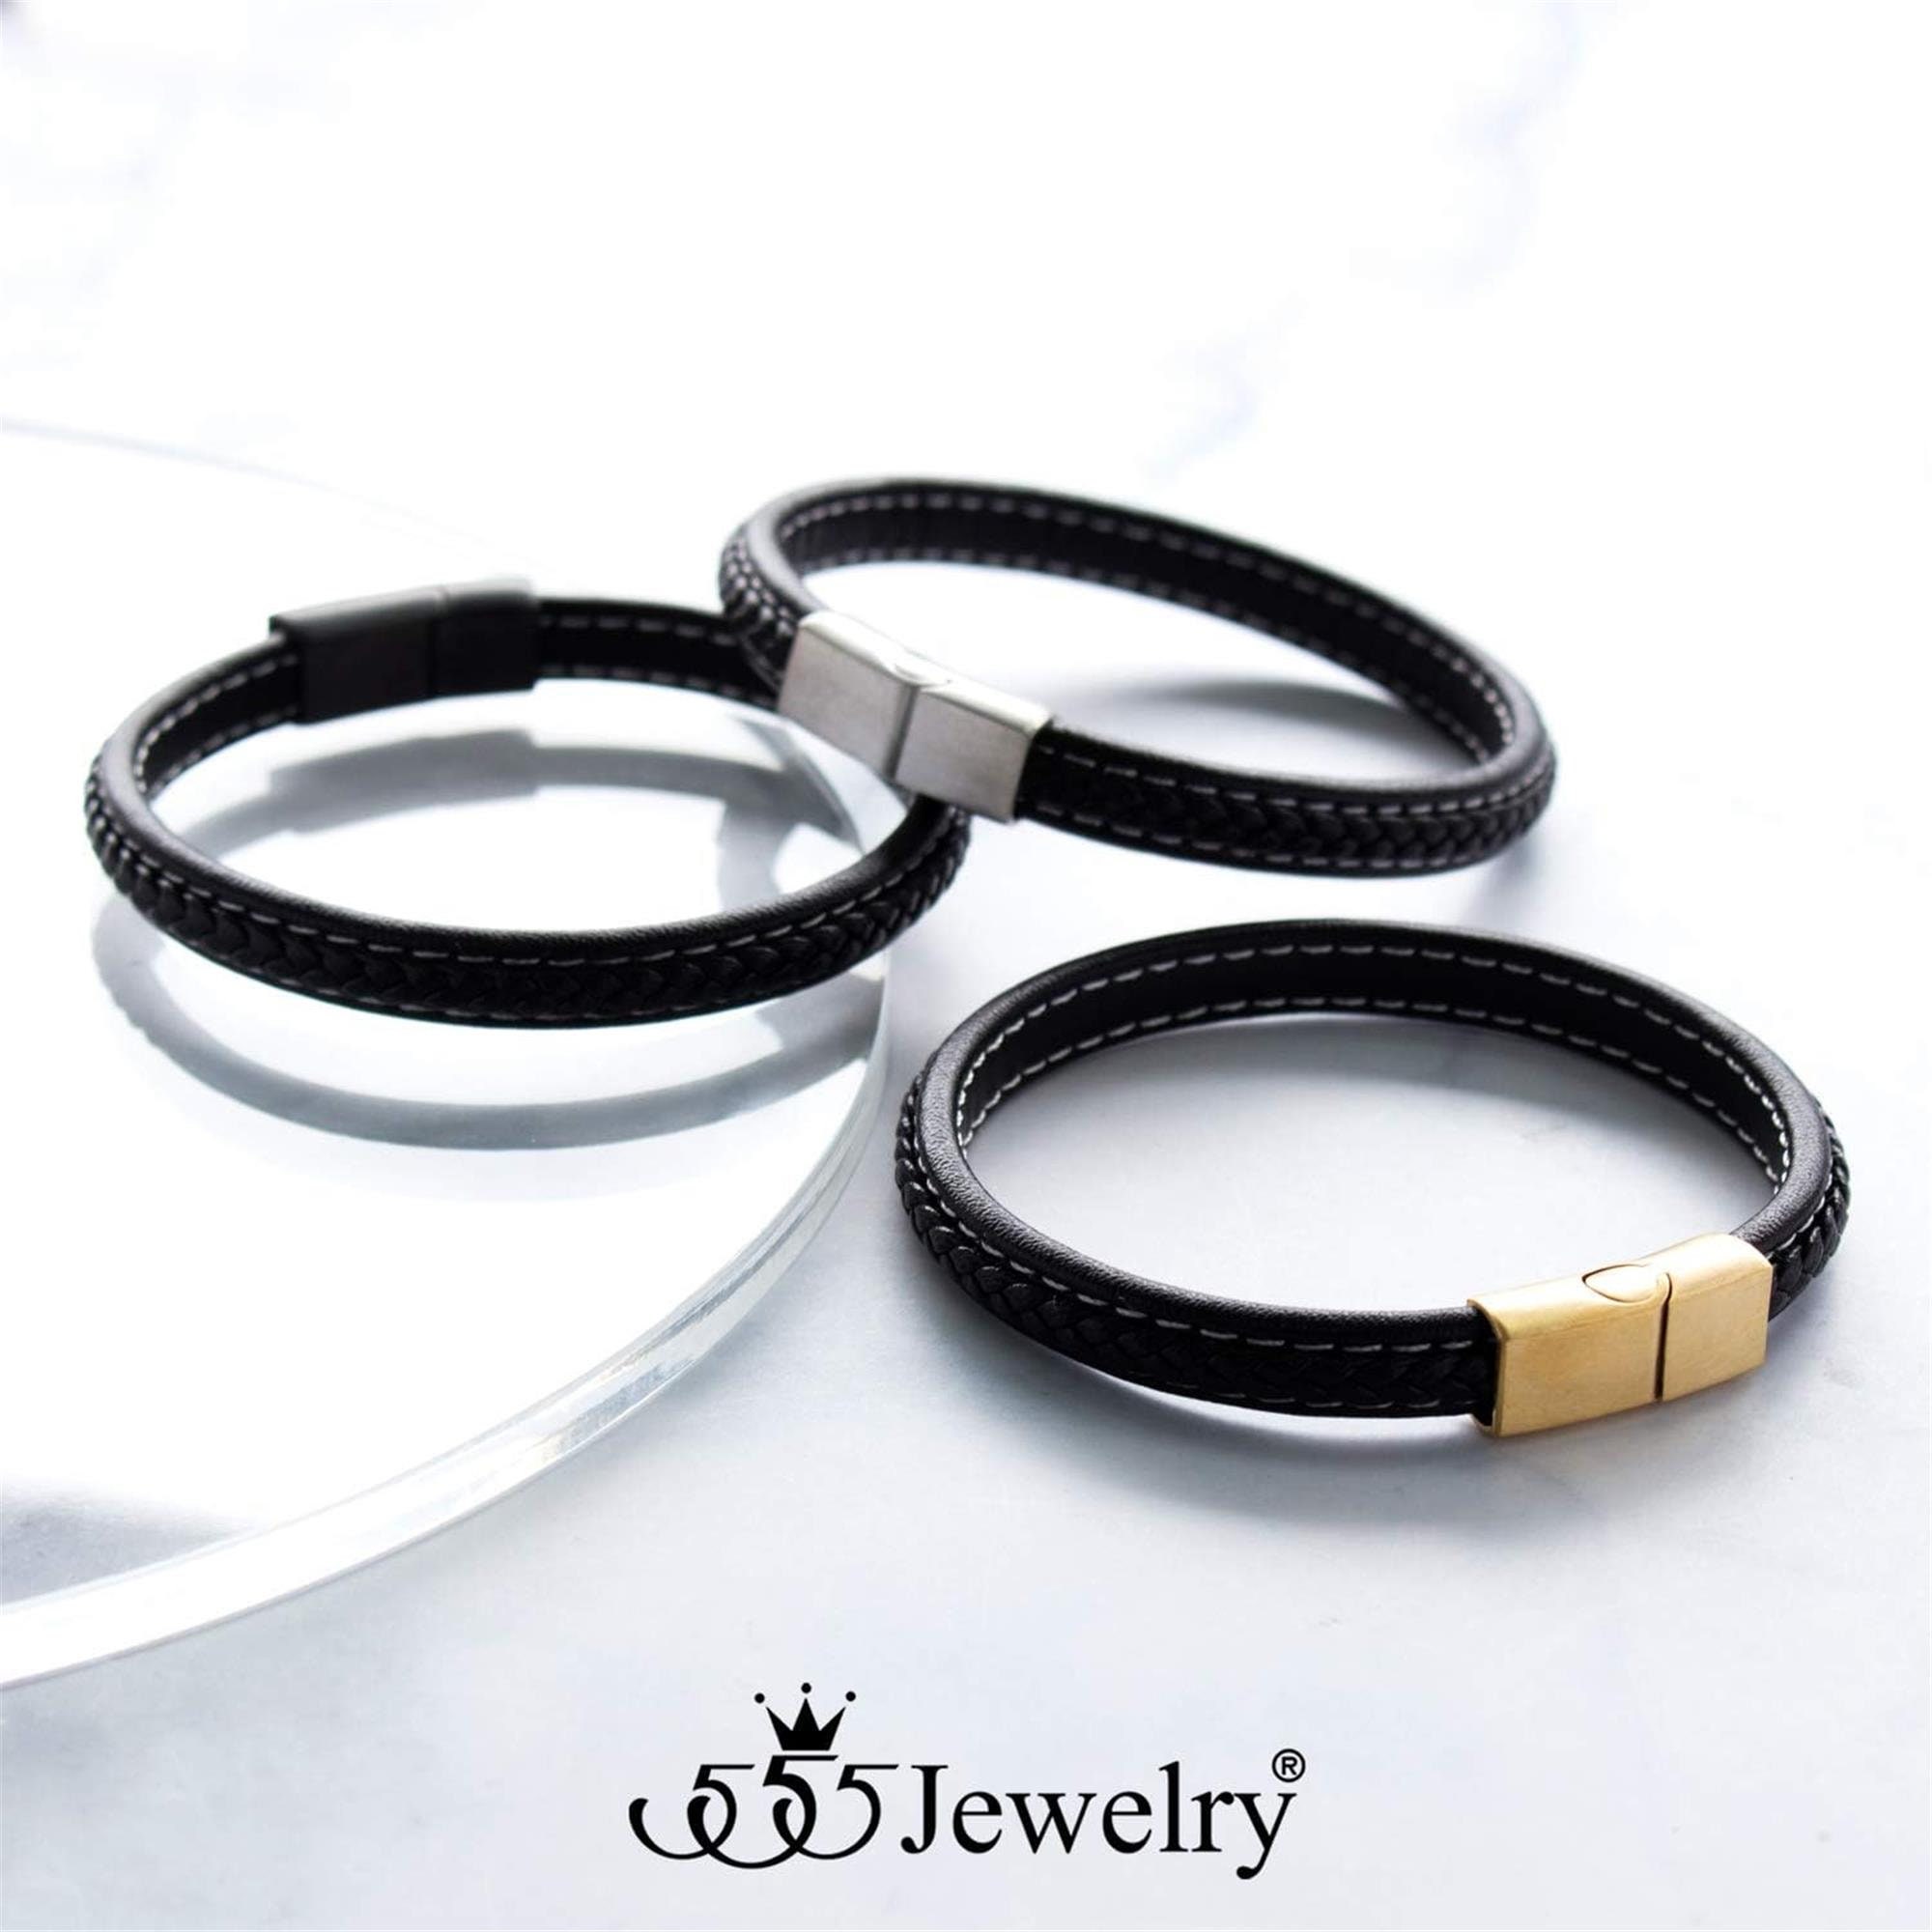 Wholesale SUNNYCLUE DIY 4 Sets Braided Leather Bracelet Making Kit  Multilayer Rope Bangle Cuff Wristband with Blank Alloy Cabochon Bezel Tray  